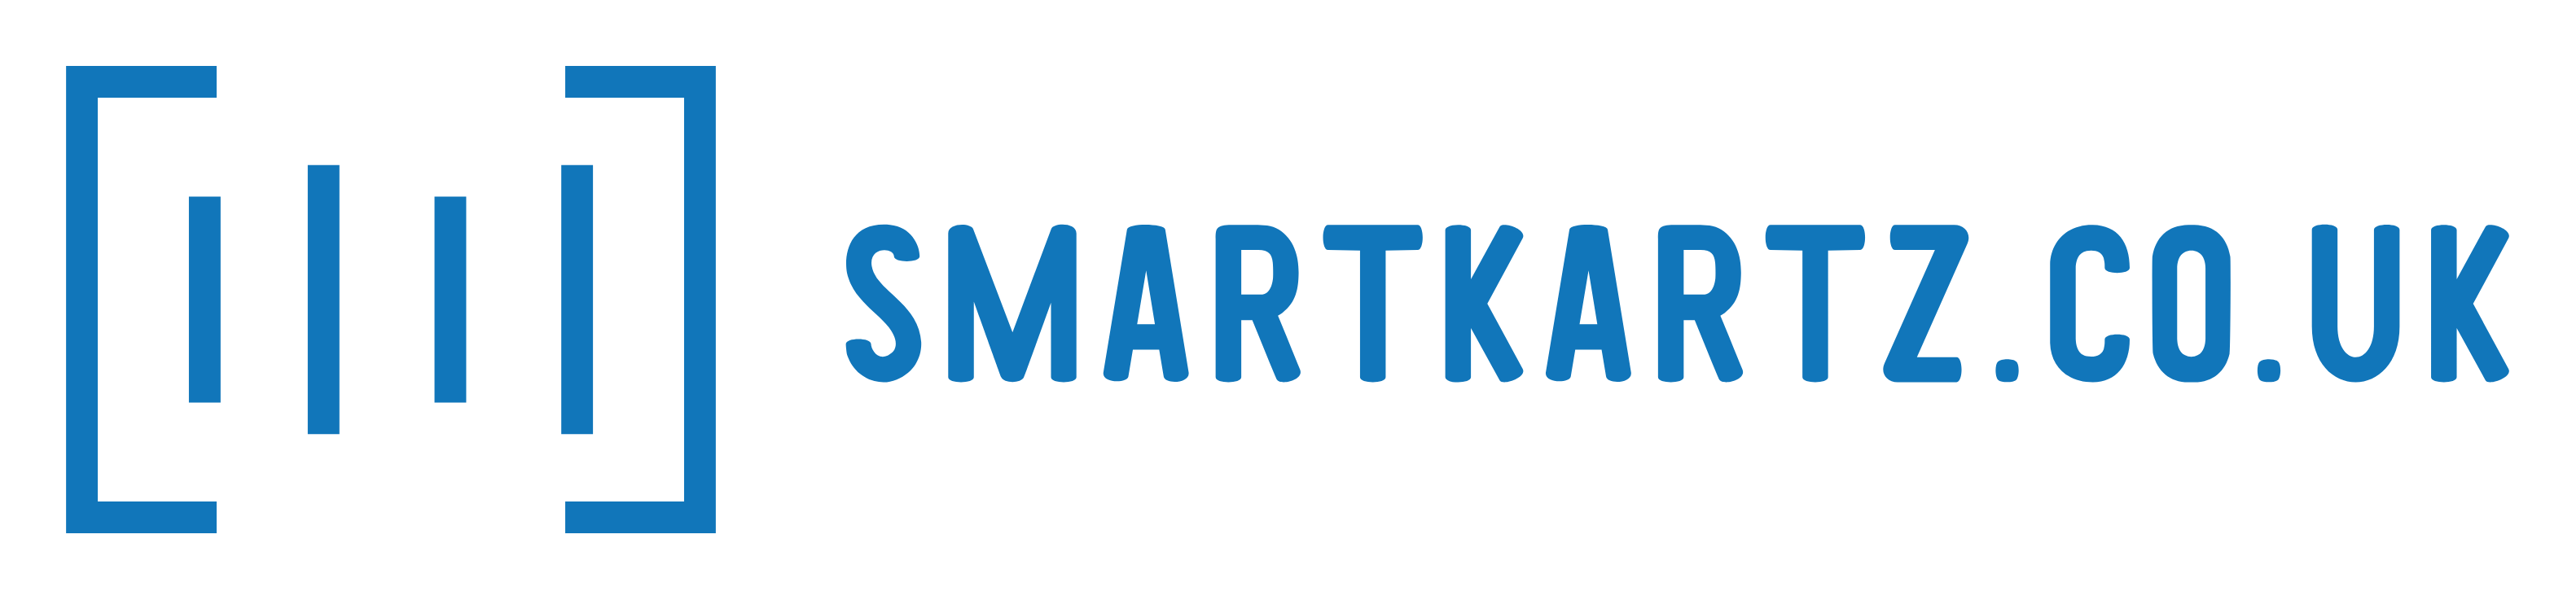 Smartkartz.co.uk